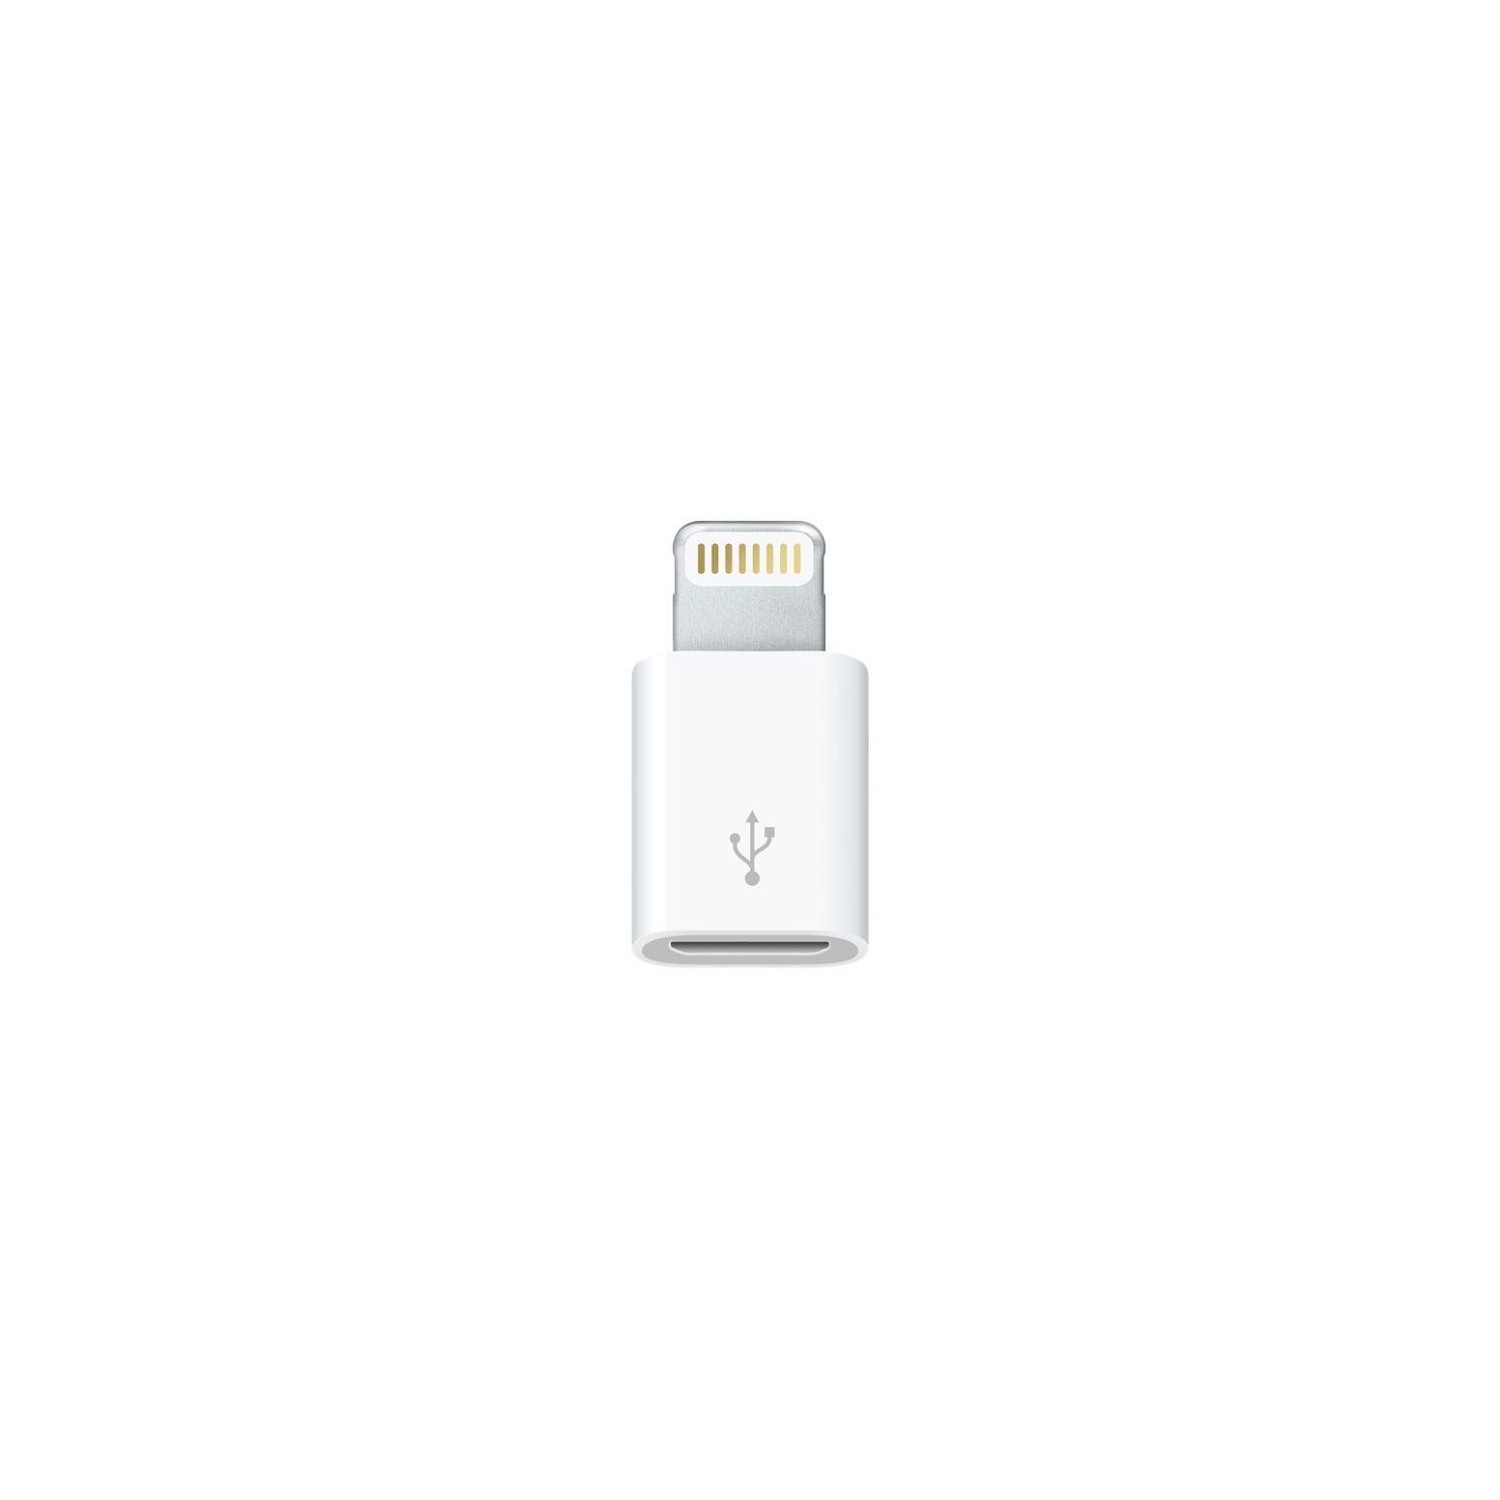 Cable original de conector Lightning a USB (1 m) MD818ZMA para Iphone5/6/6s nuevo